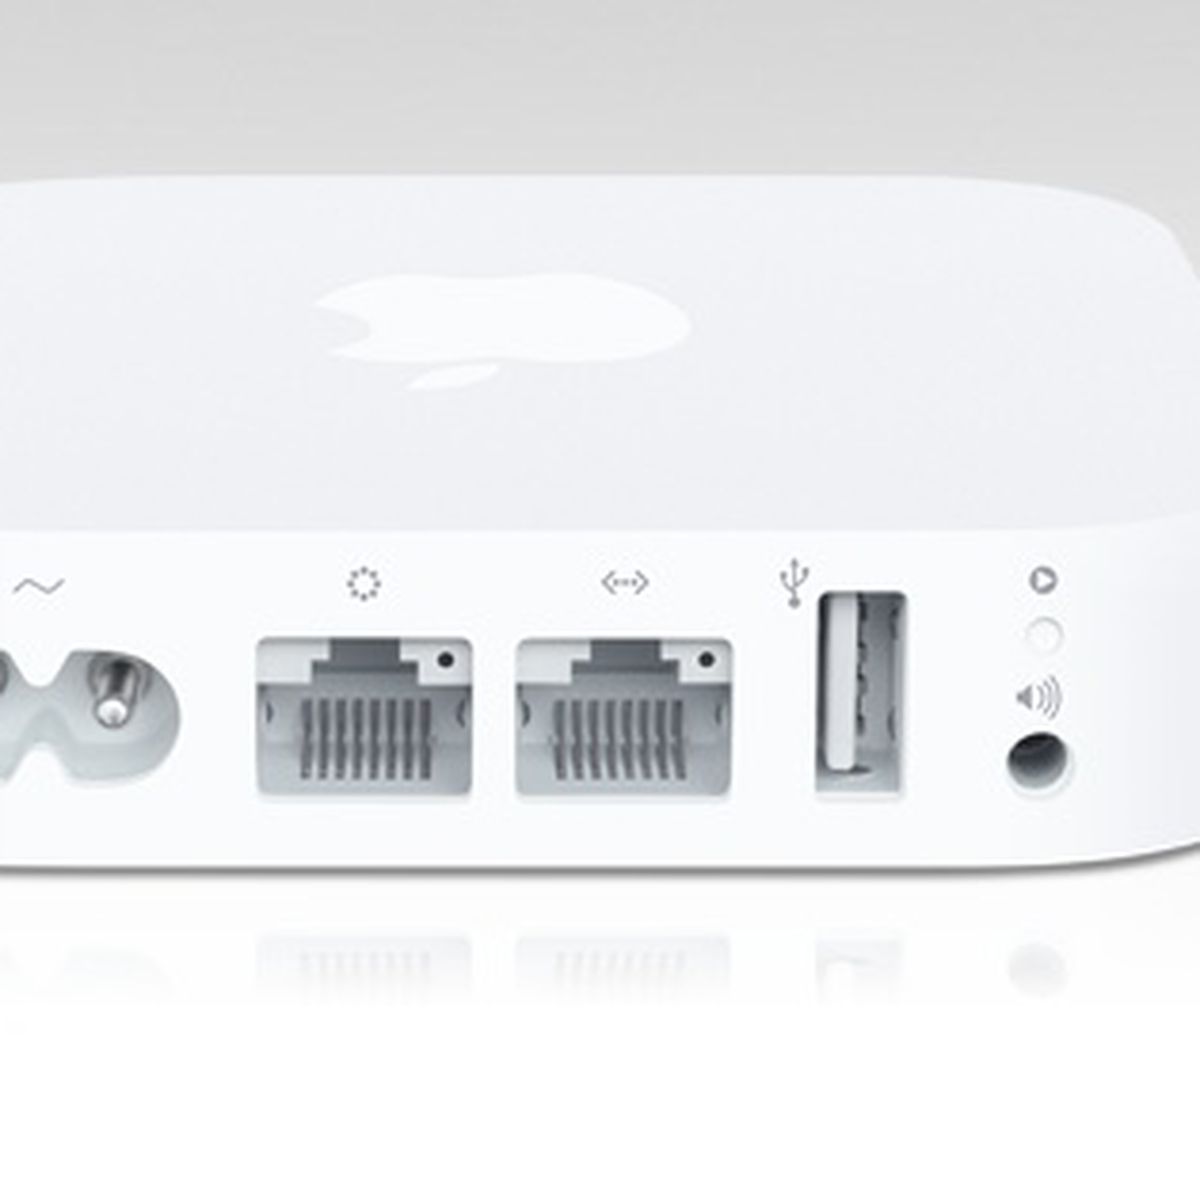 Apple USB Disk for 2012 Express - MacRumors